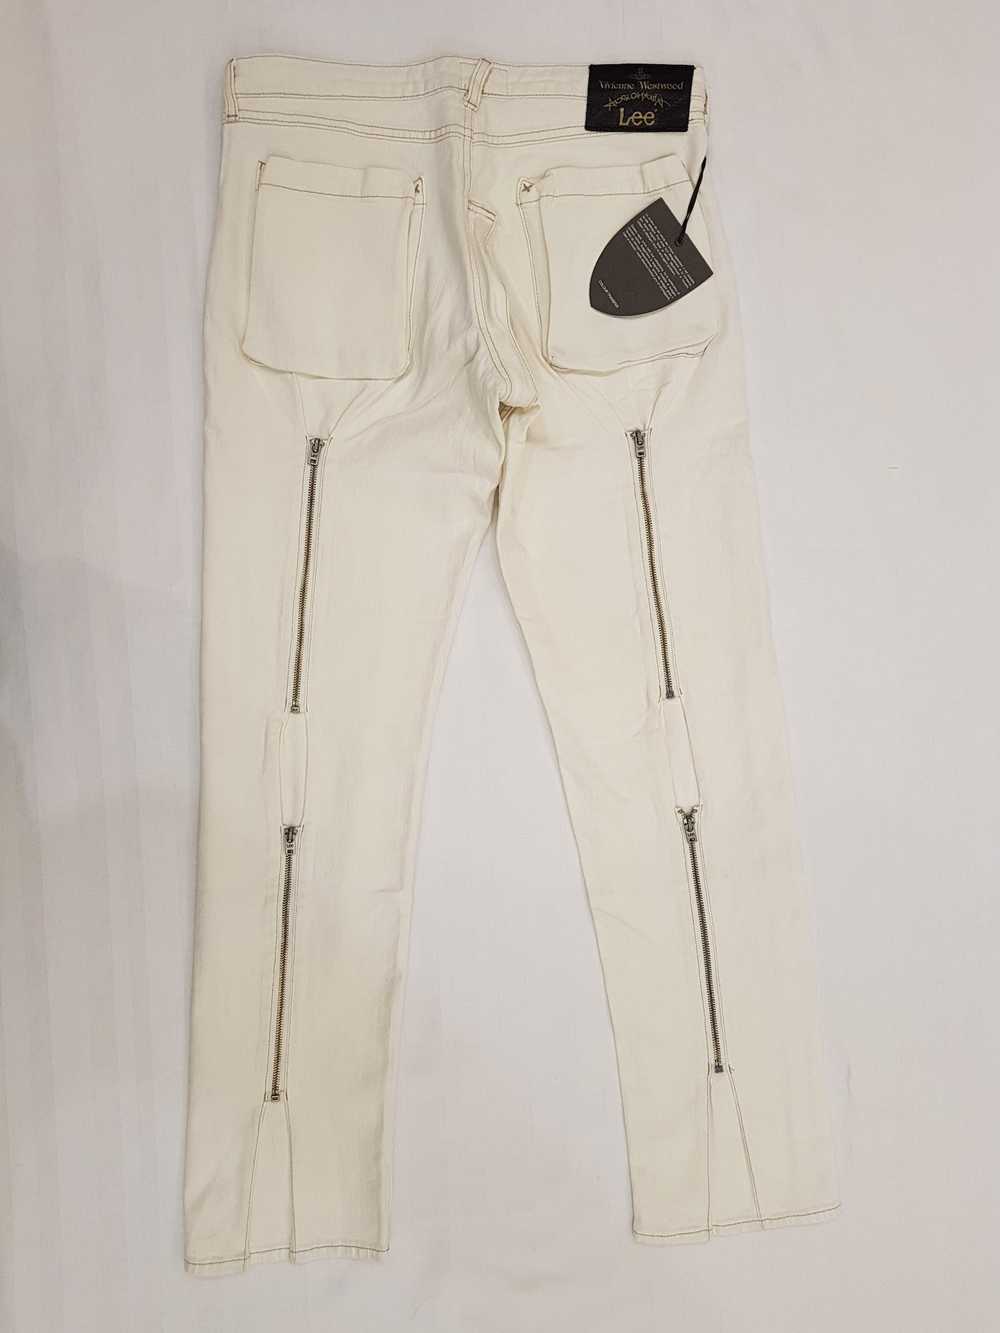 Vivienne Westwood NEW SS11 Cargo Zip Pants x Lee - image 2